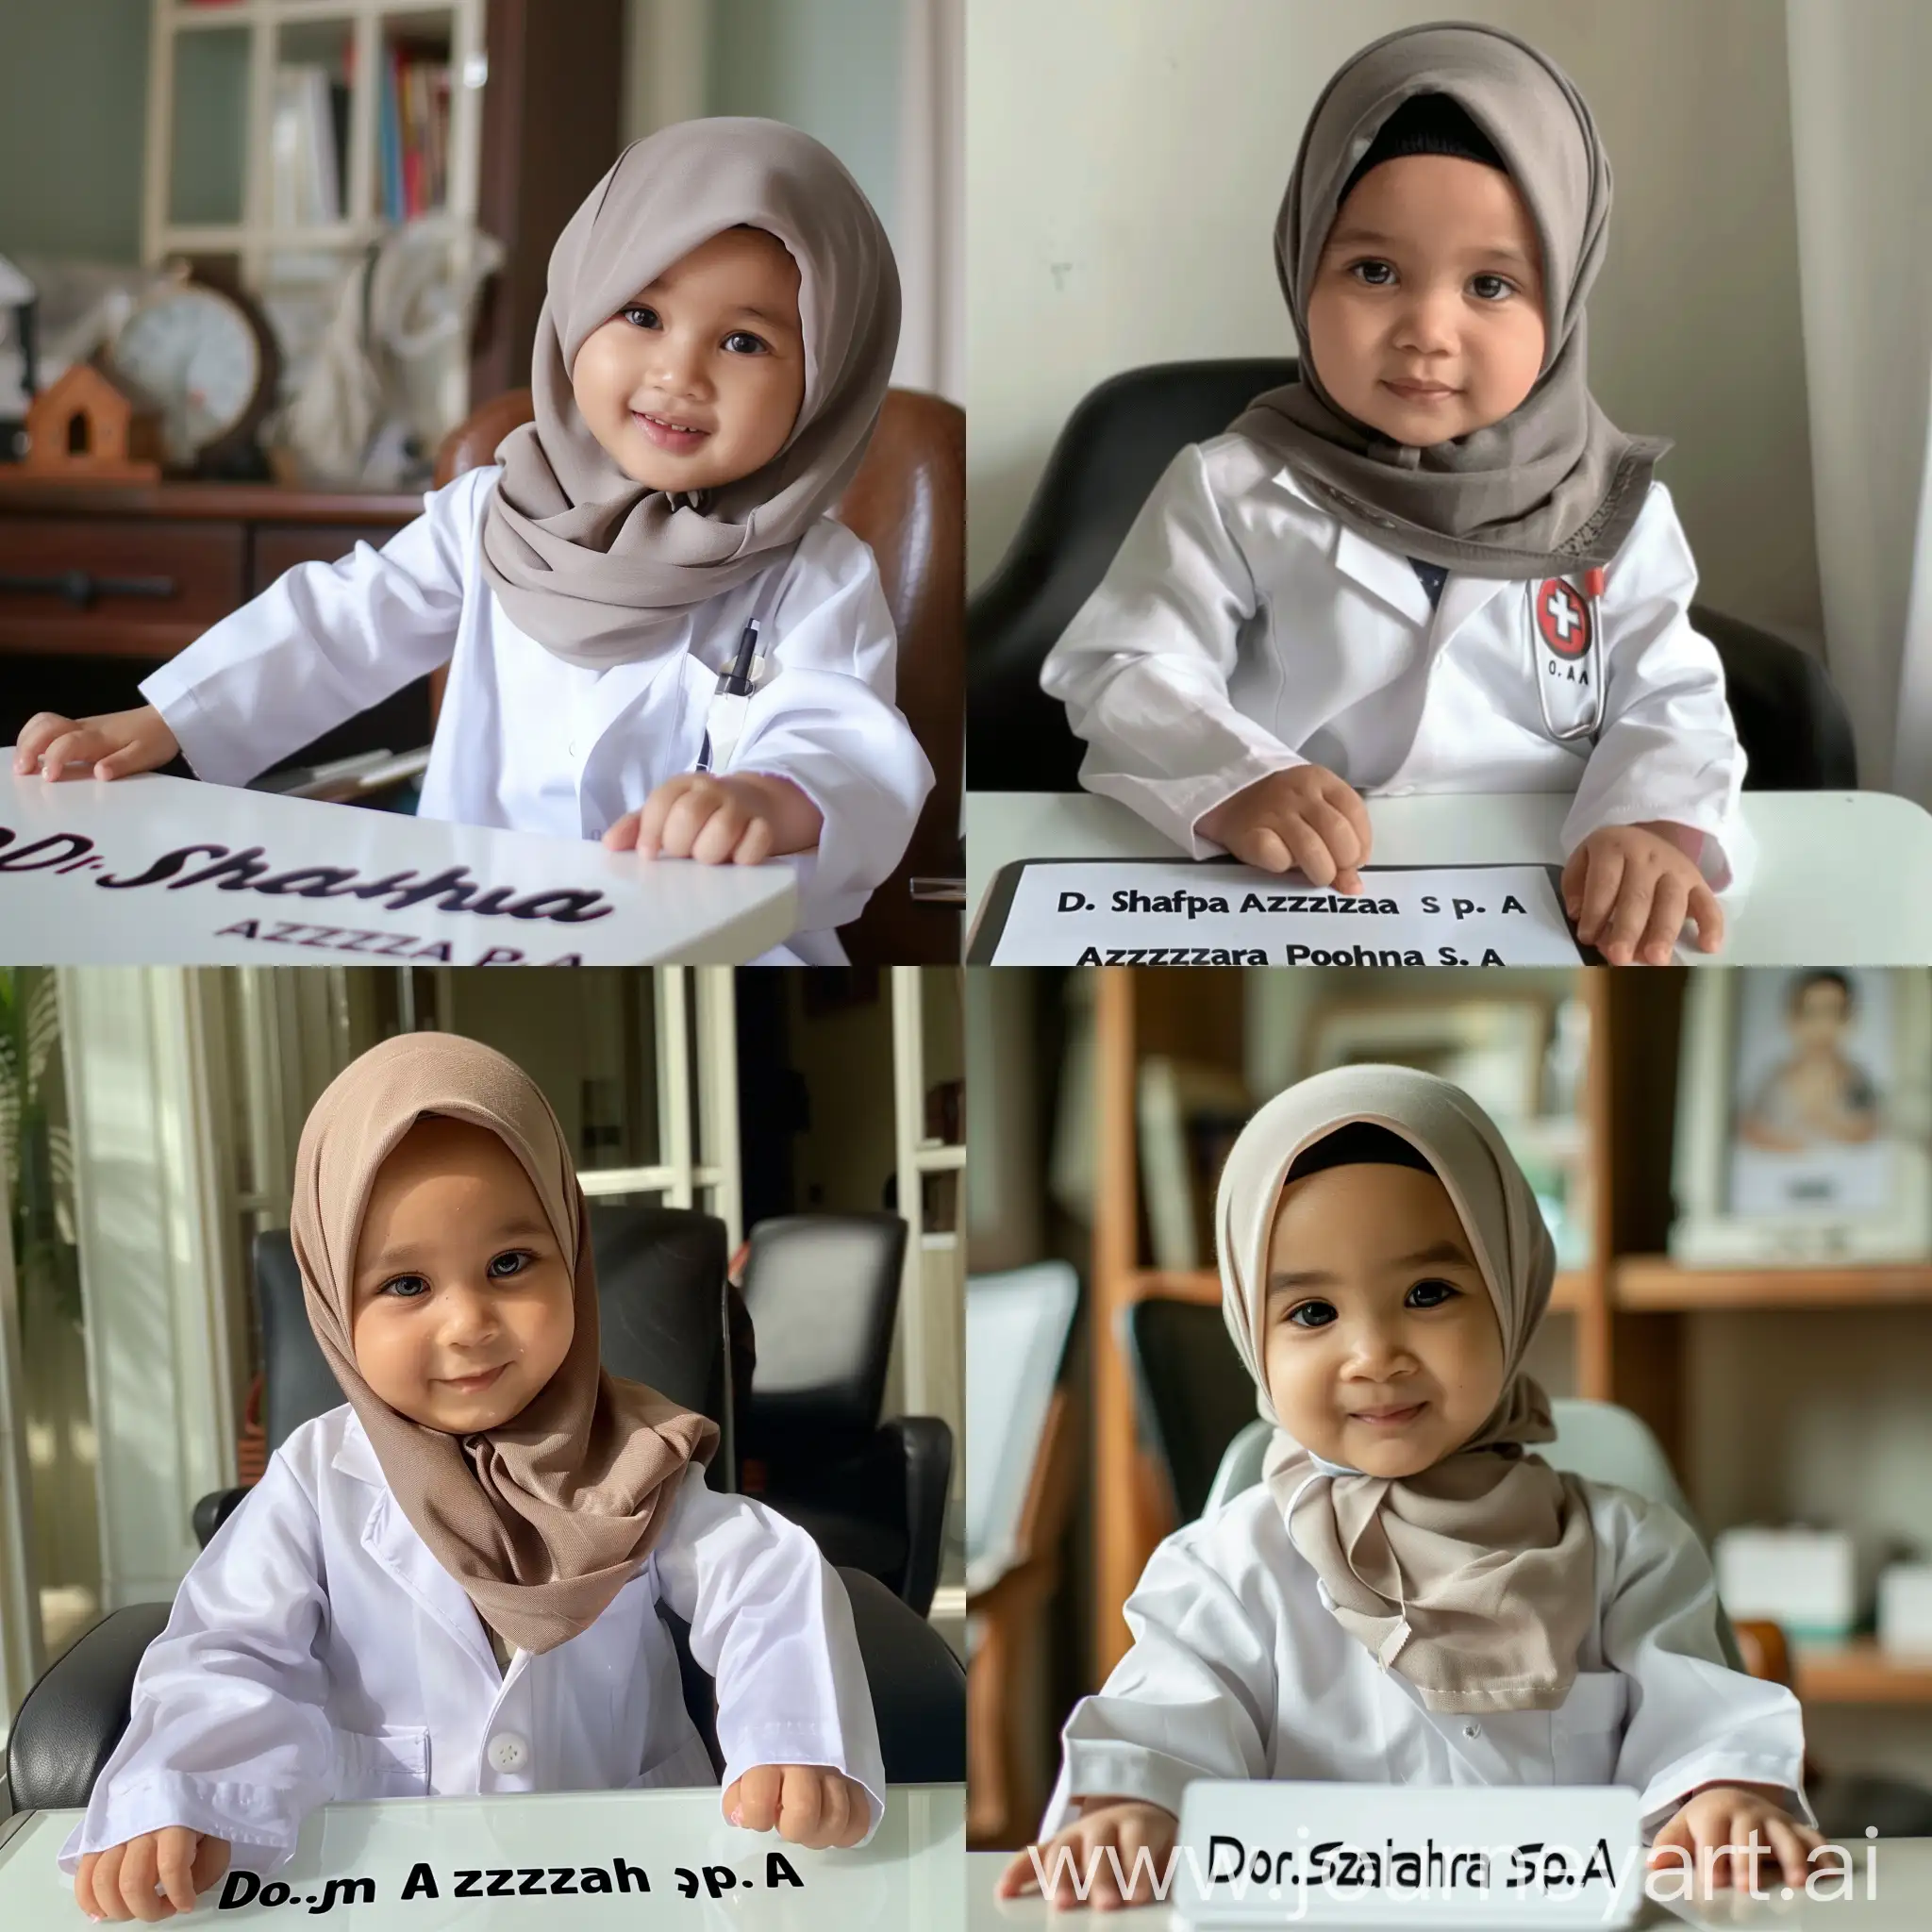 Young-Indonesian-Toddler-in-Hijab-as-Aspiring-Pediatrician